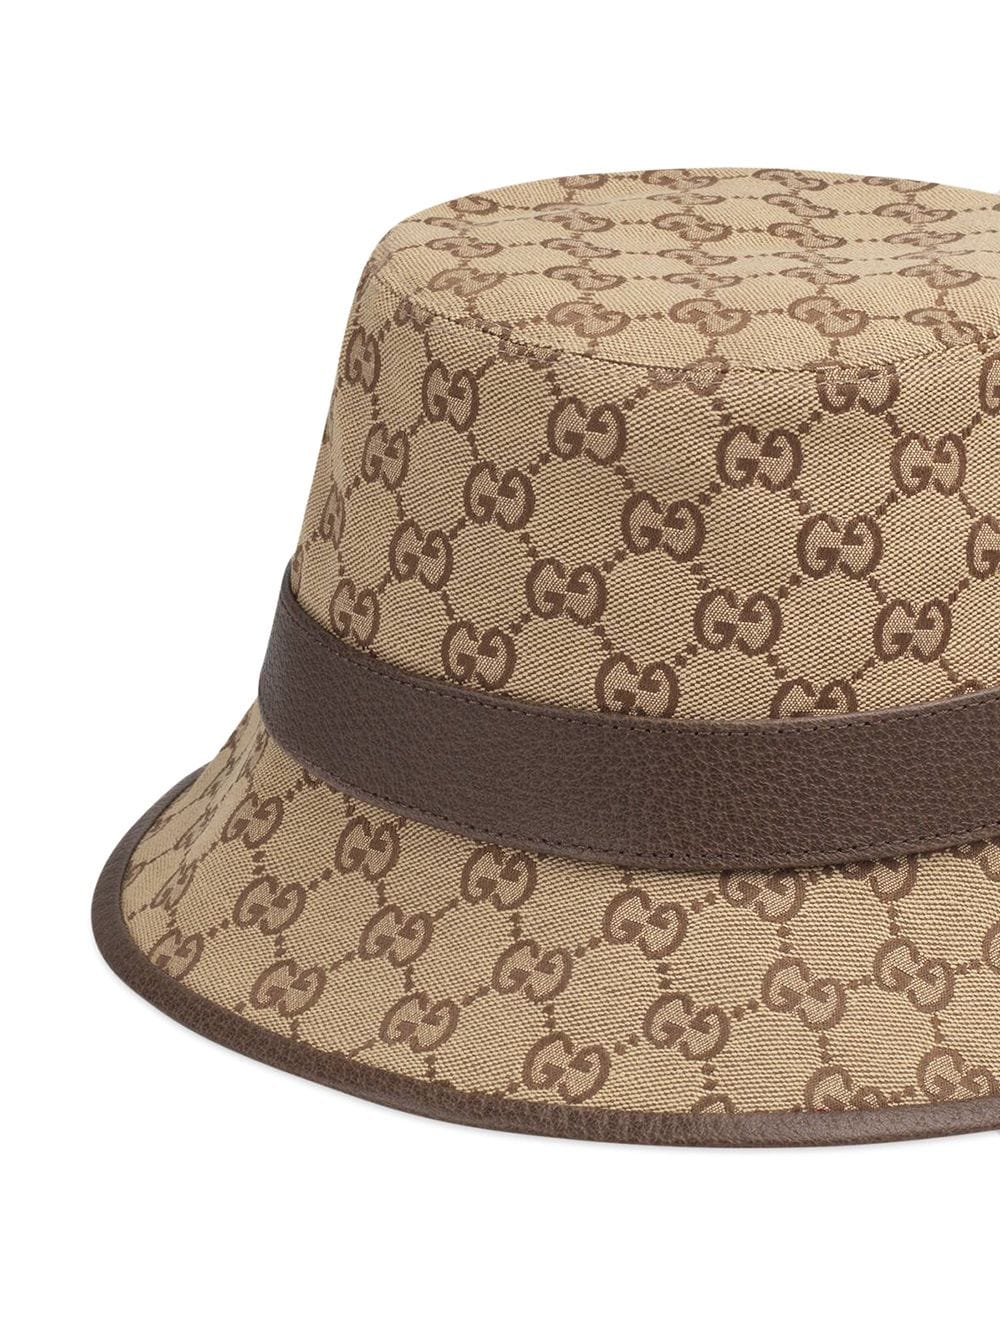 New!! Gucci Bucket Hat Size L